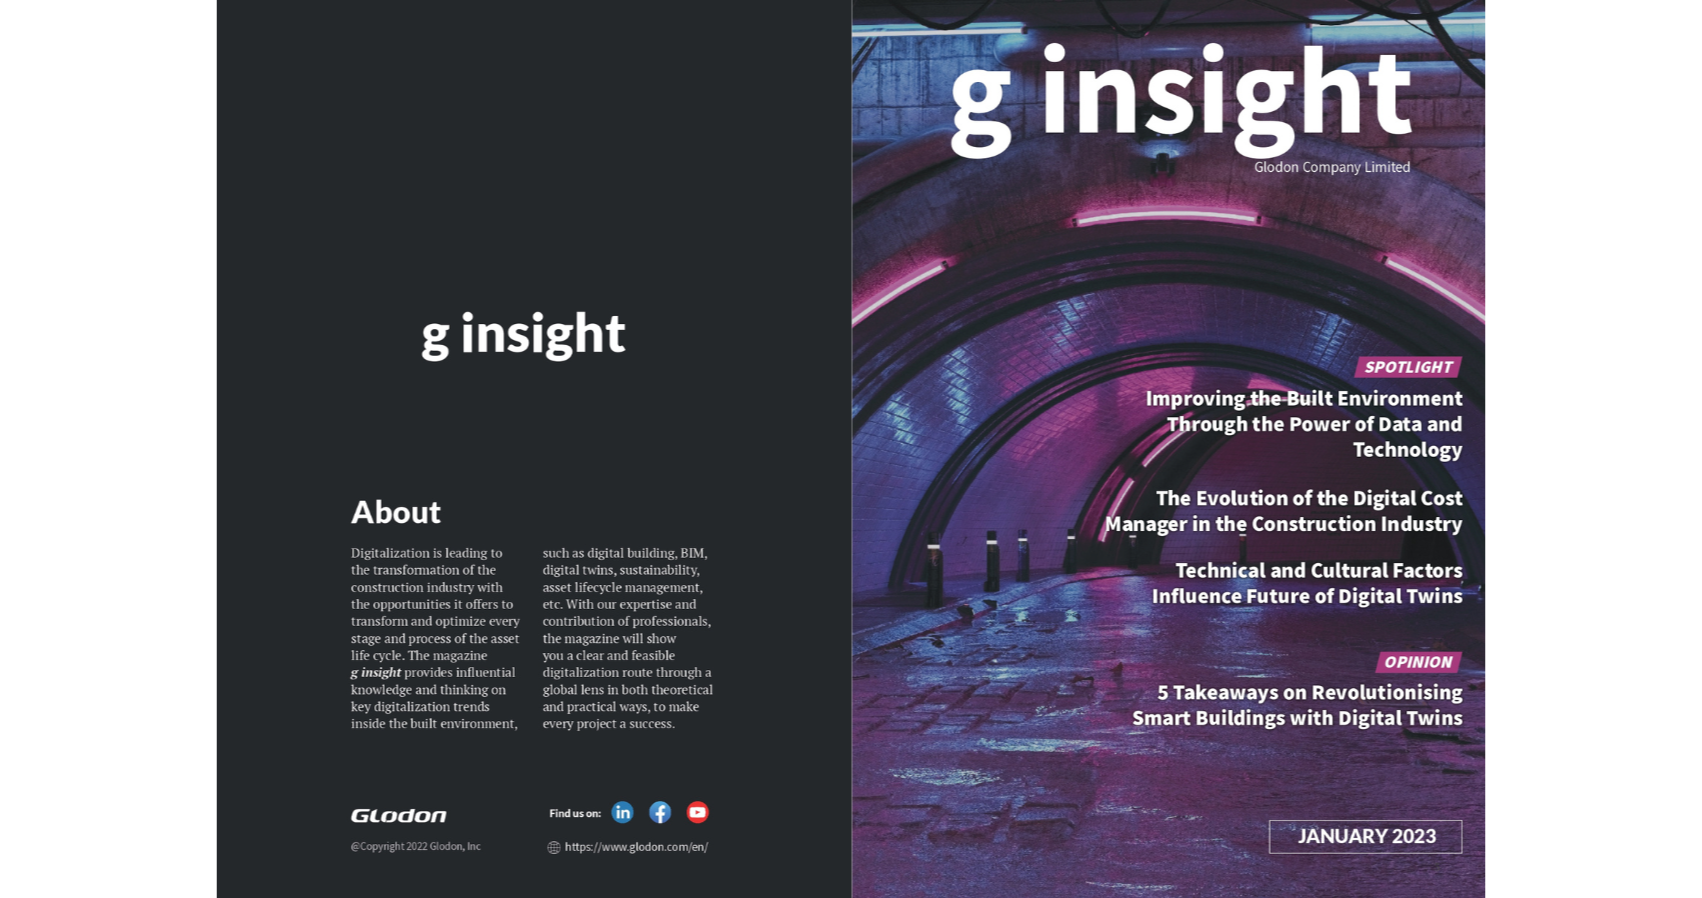 Glodon Magazine: g insight - Jan. 2023